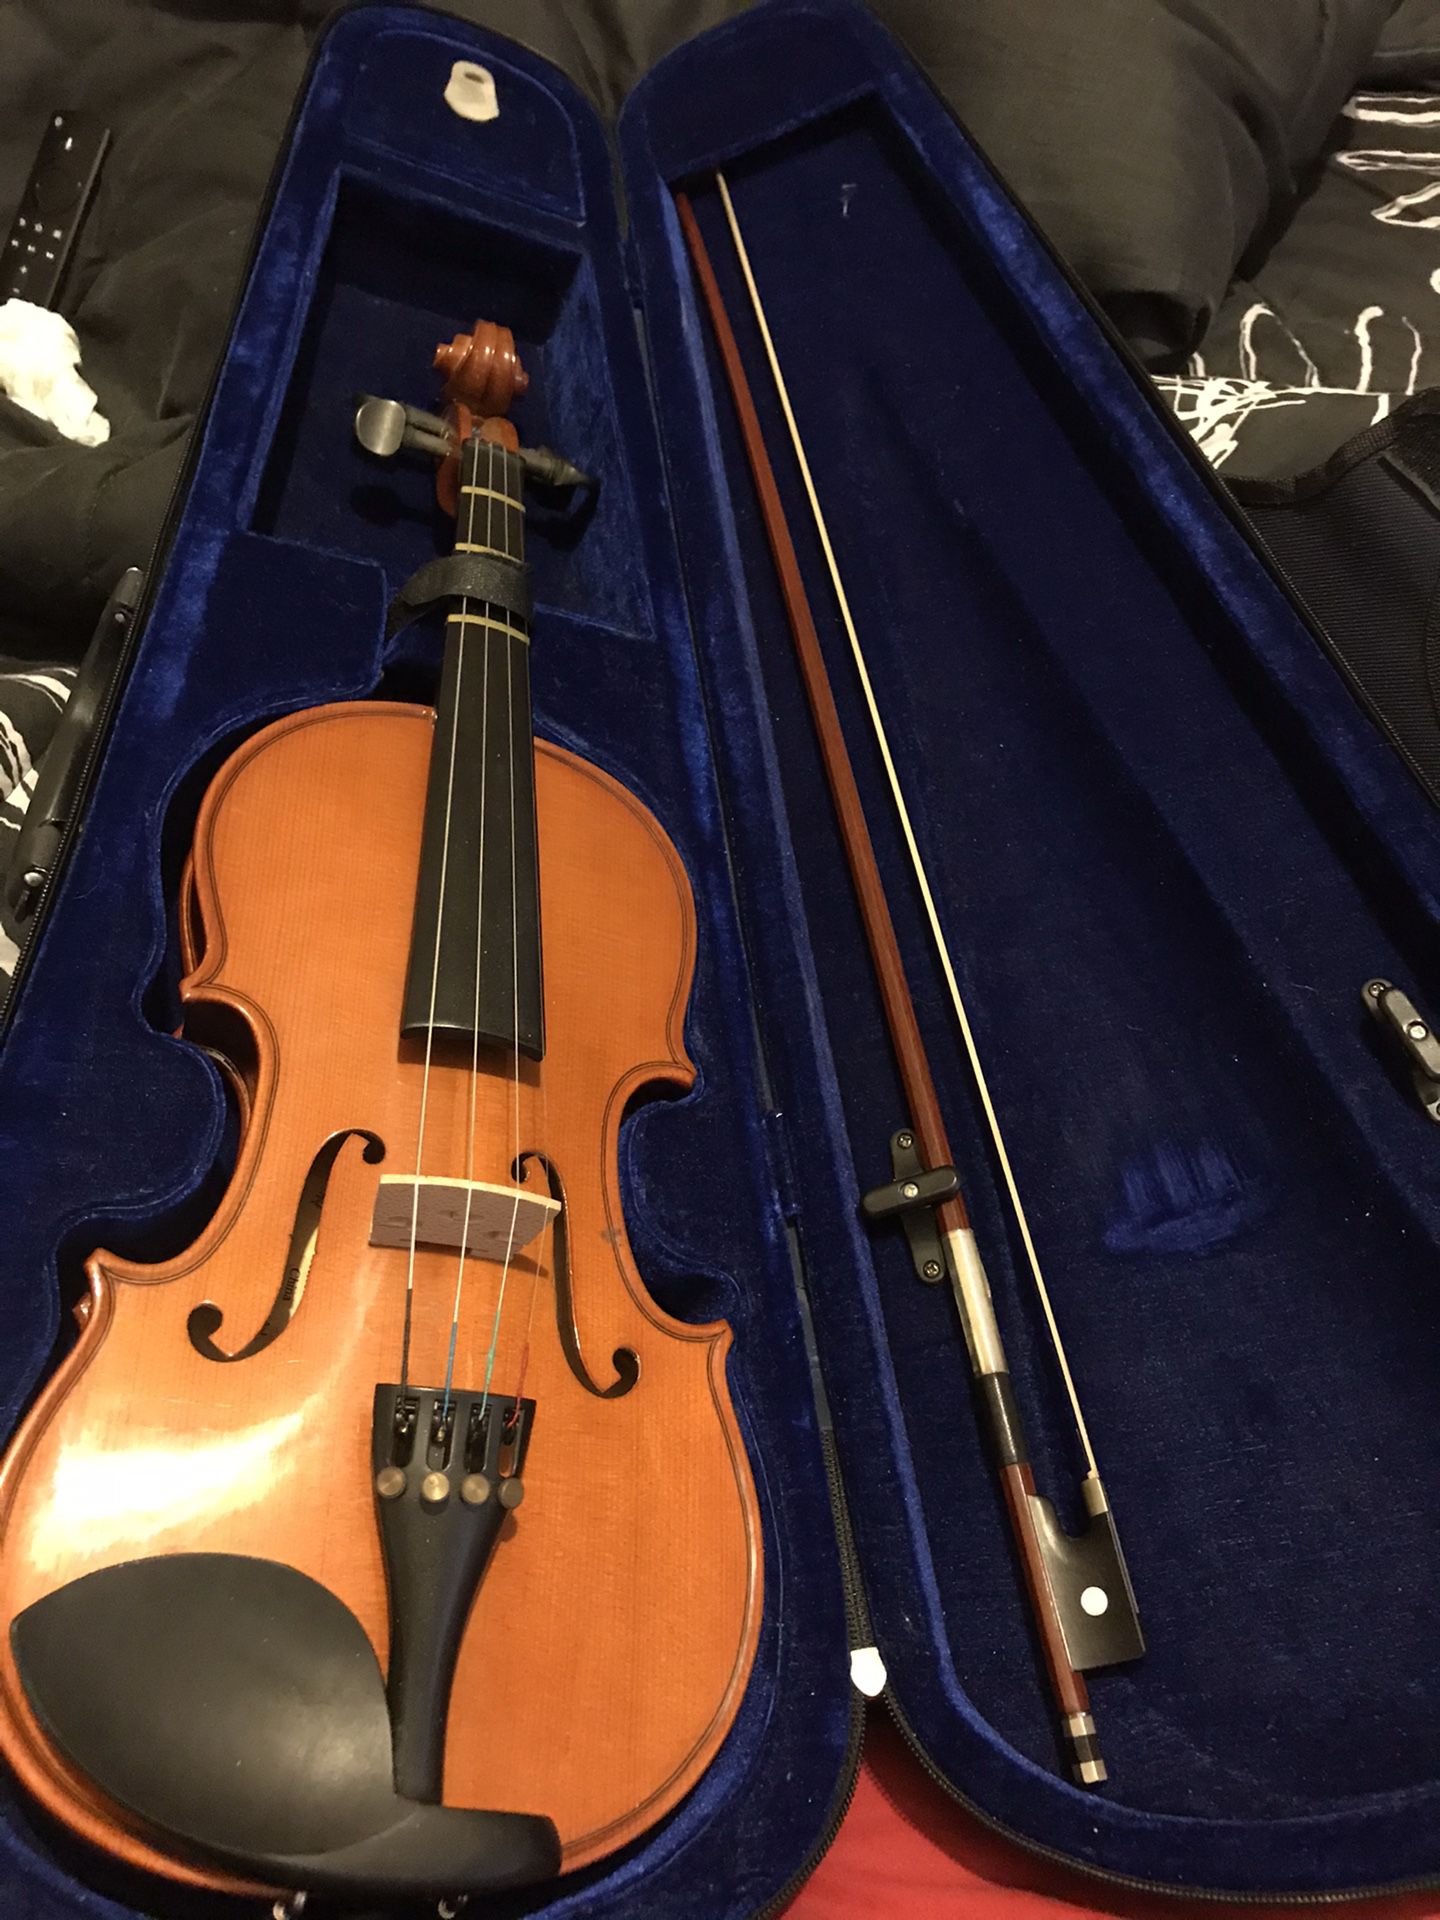 Aubert 4/4 Violin with Case $50